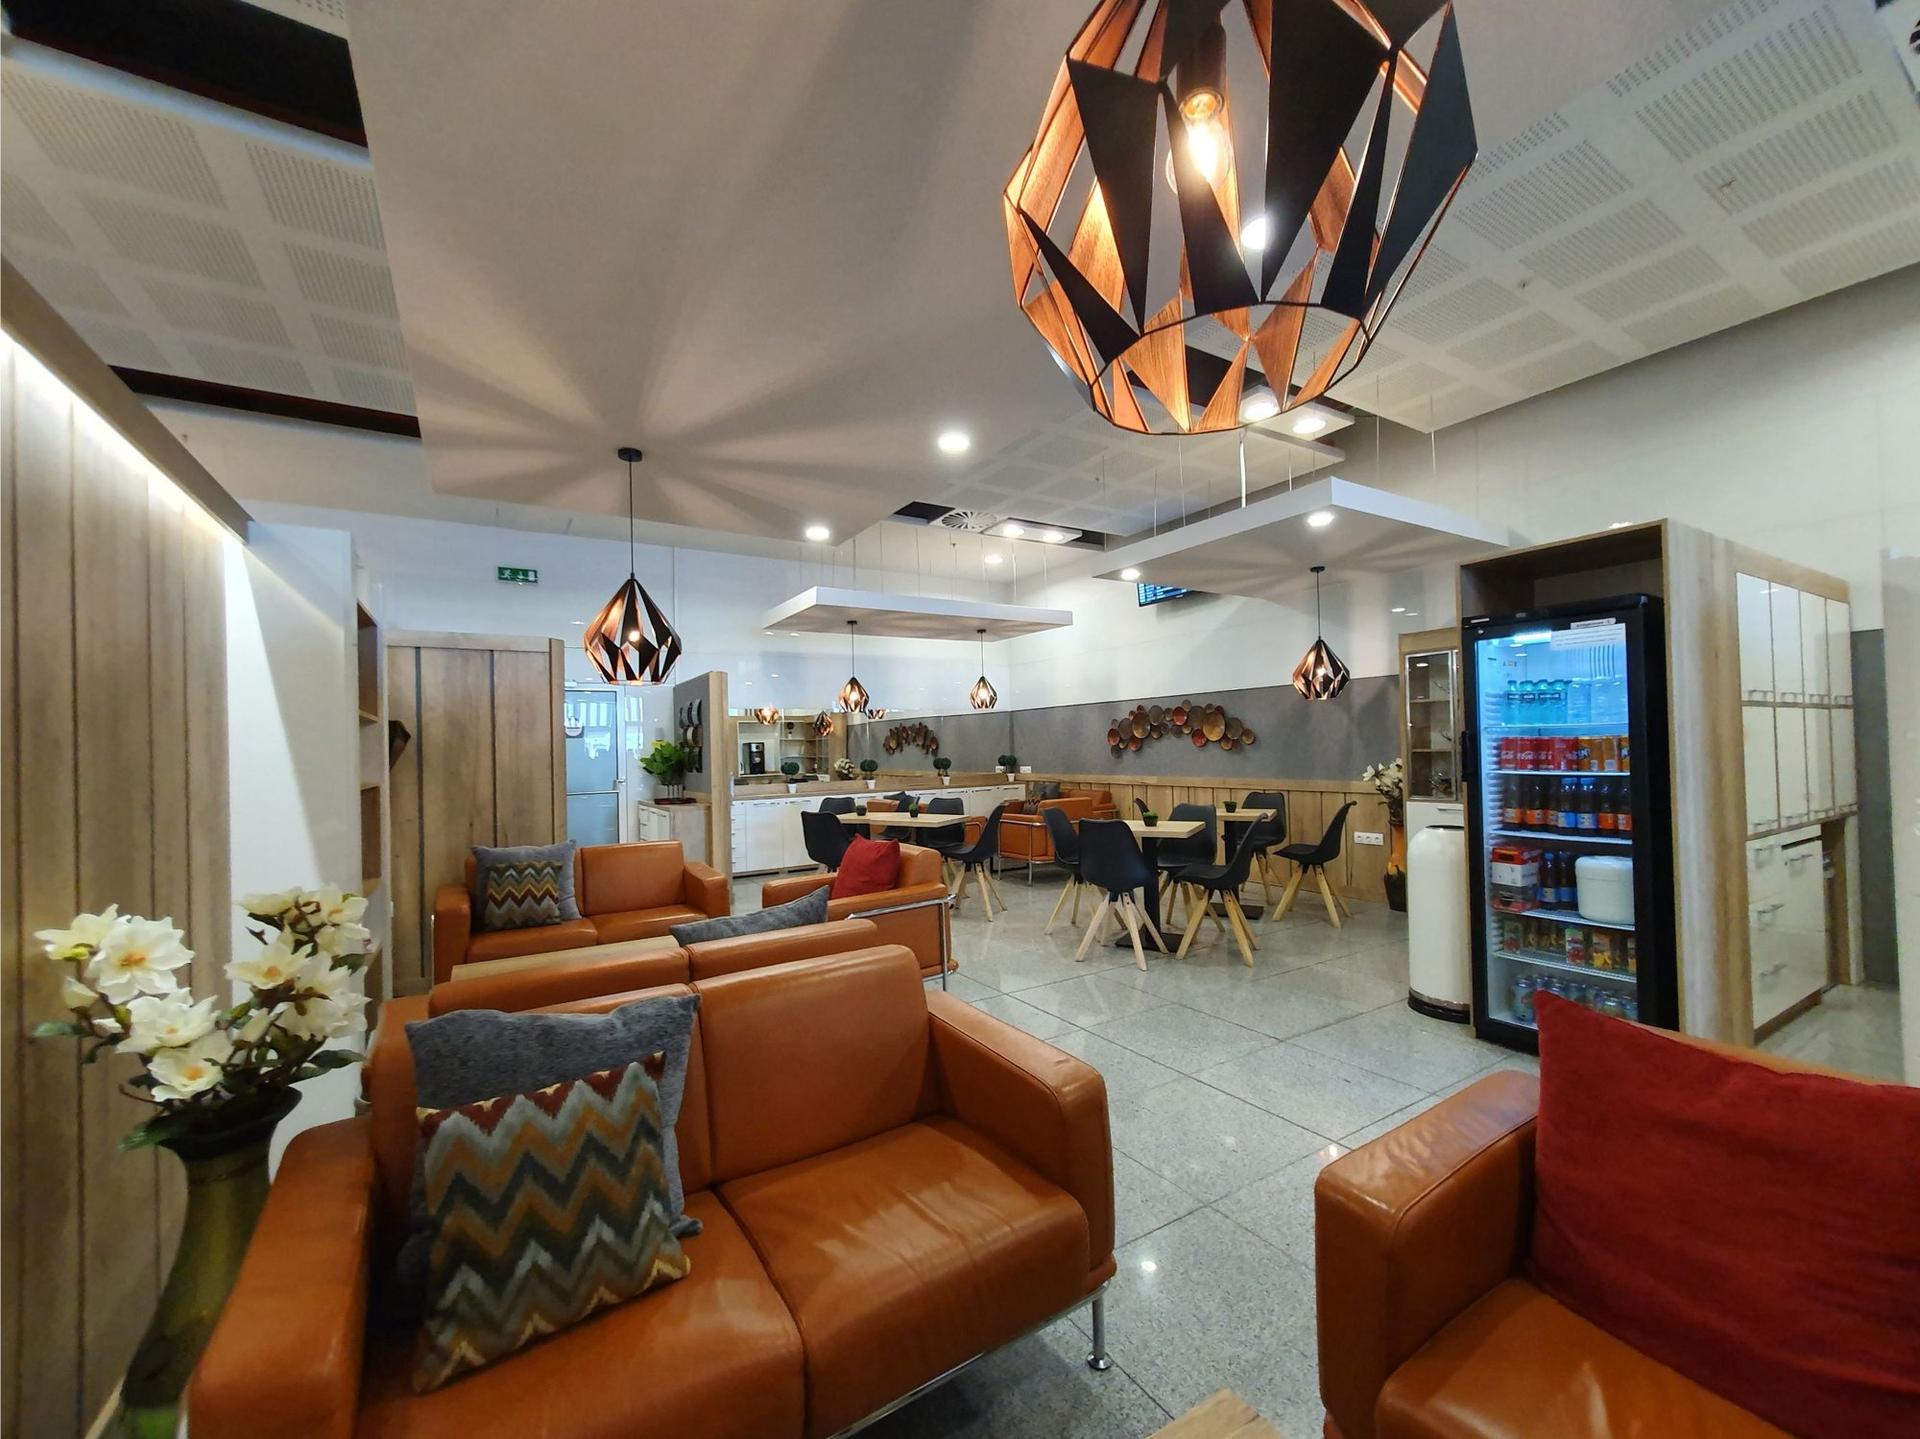 Burgas Airport Lounge image 35 of 43